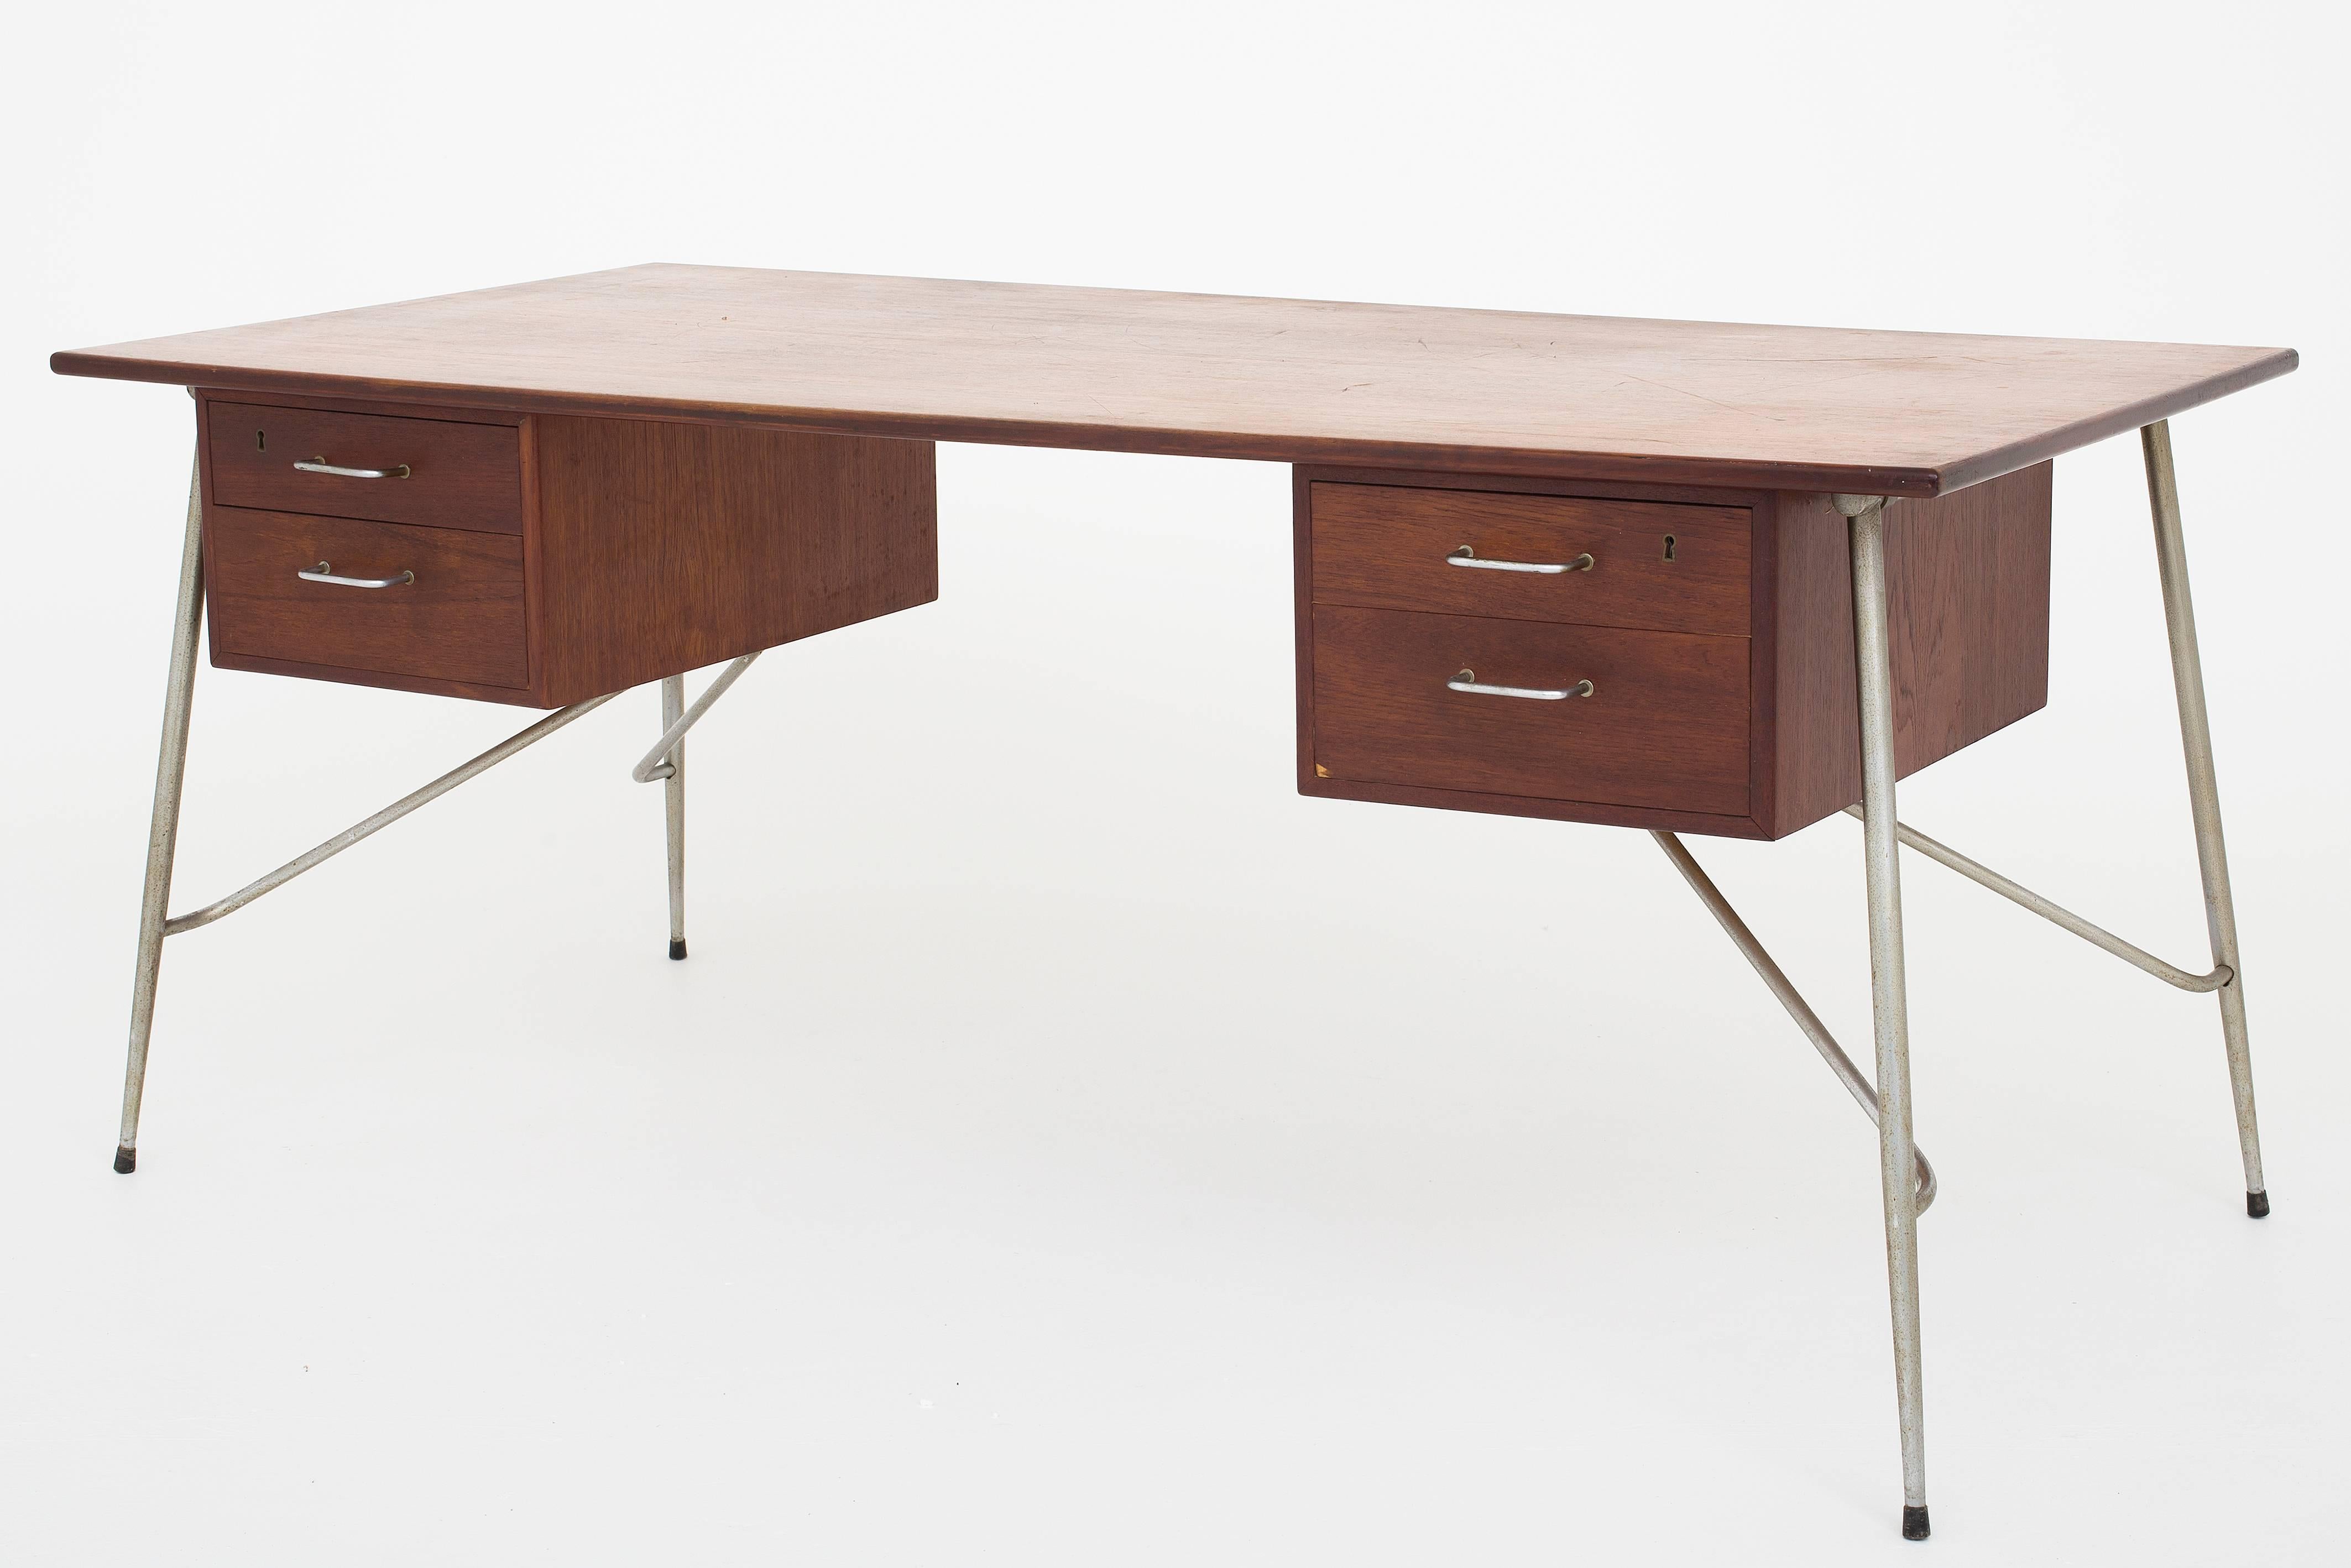 Desk in teak and steel. Designed by Børge Mogensen in 1954 for Søborg Møbelfabrik.